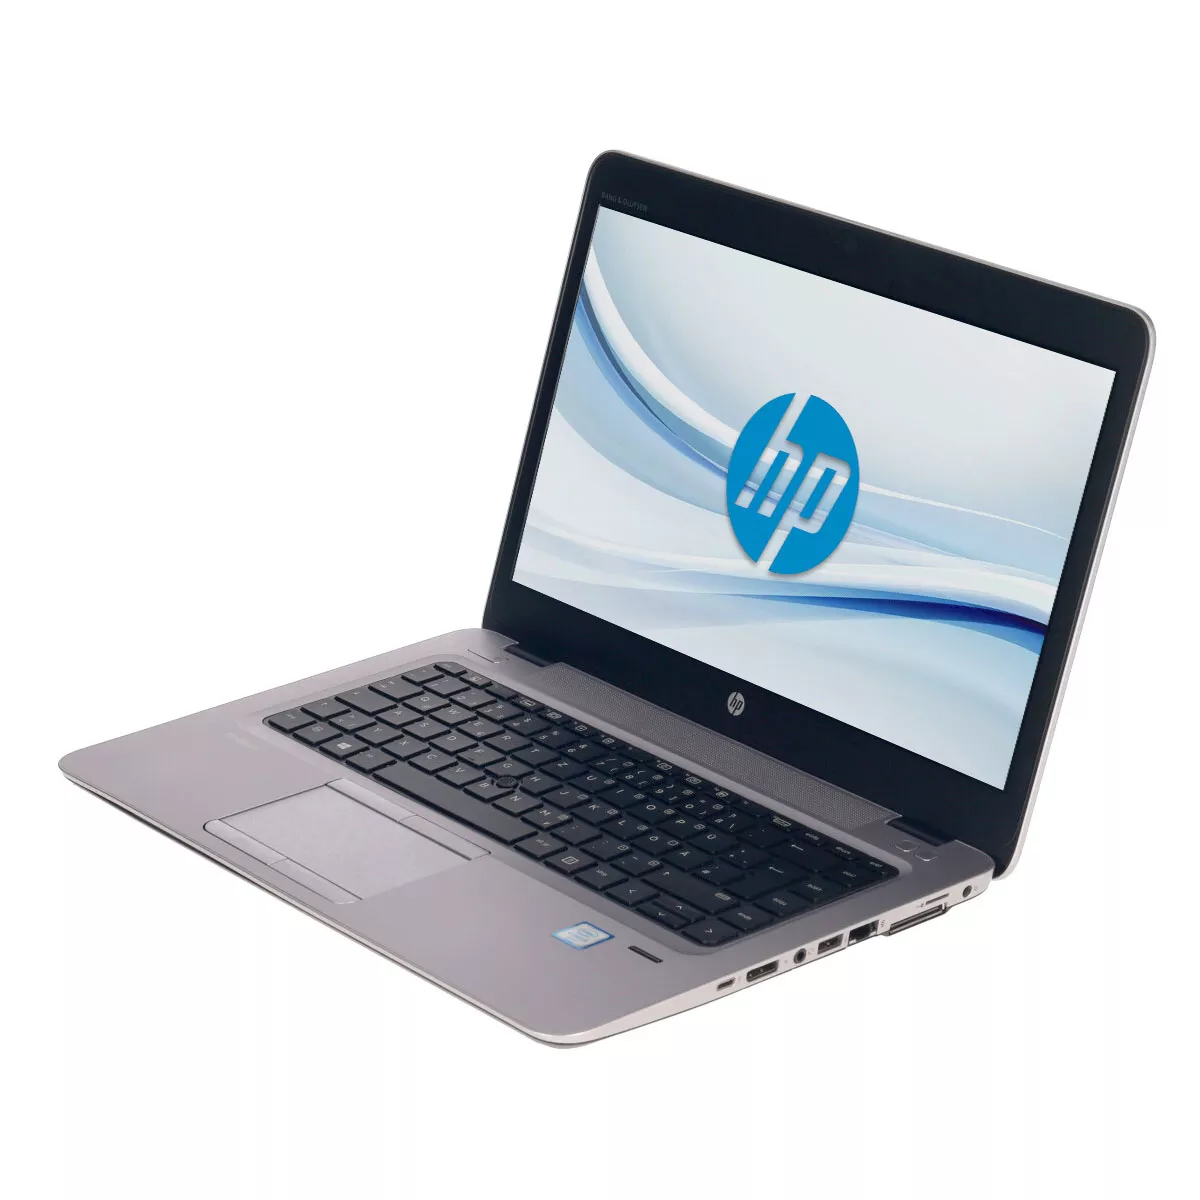 HP EliteBook 745 G3 Full-HD Pro AMD Radeon R6 180 GB m.2 SSD Webcam